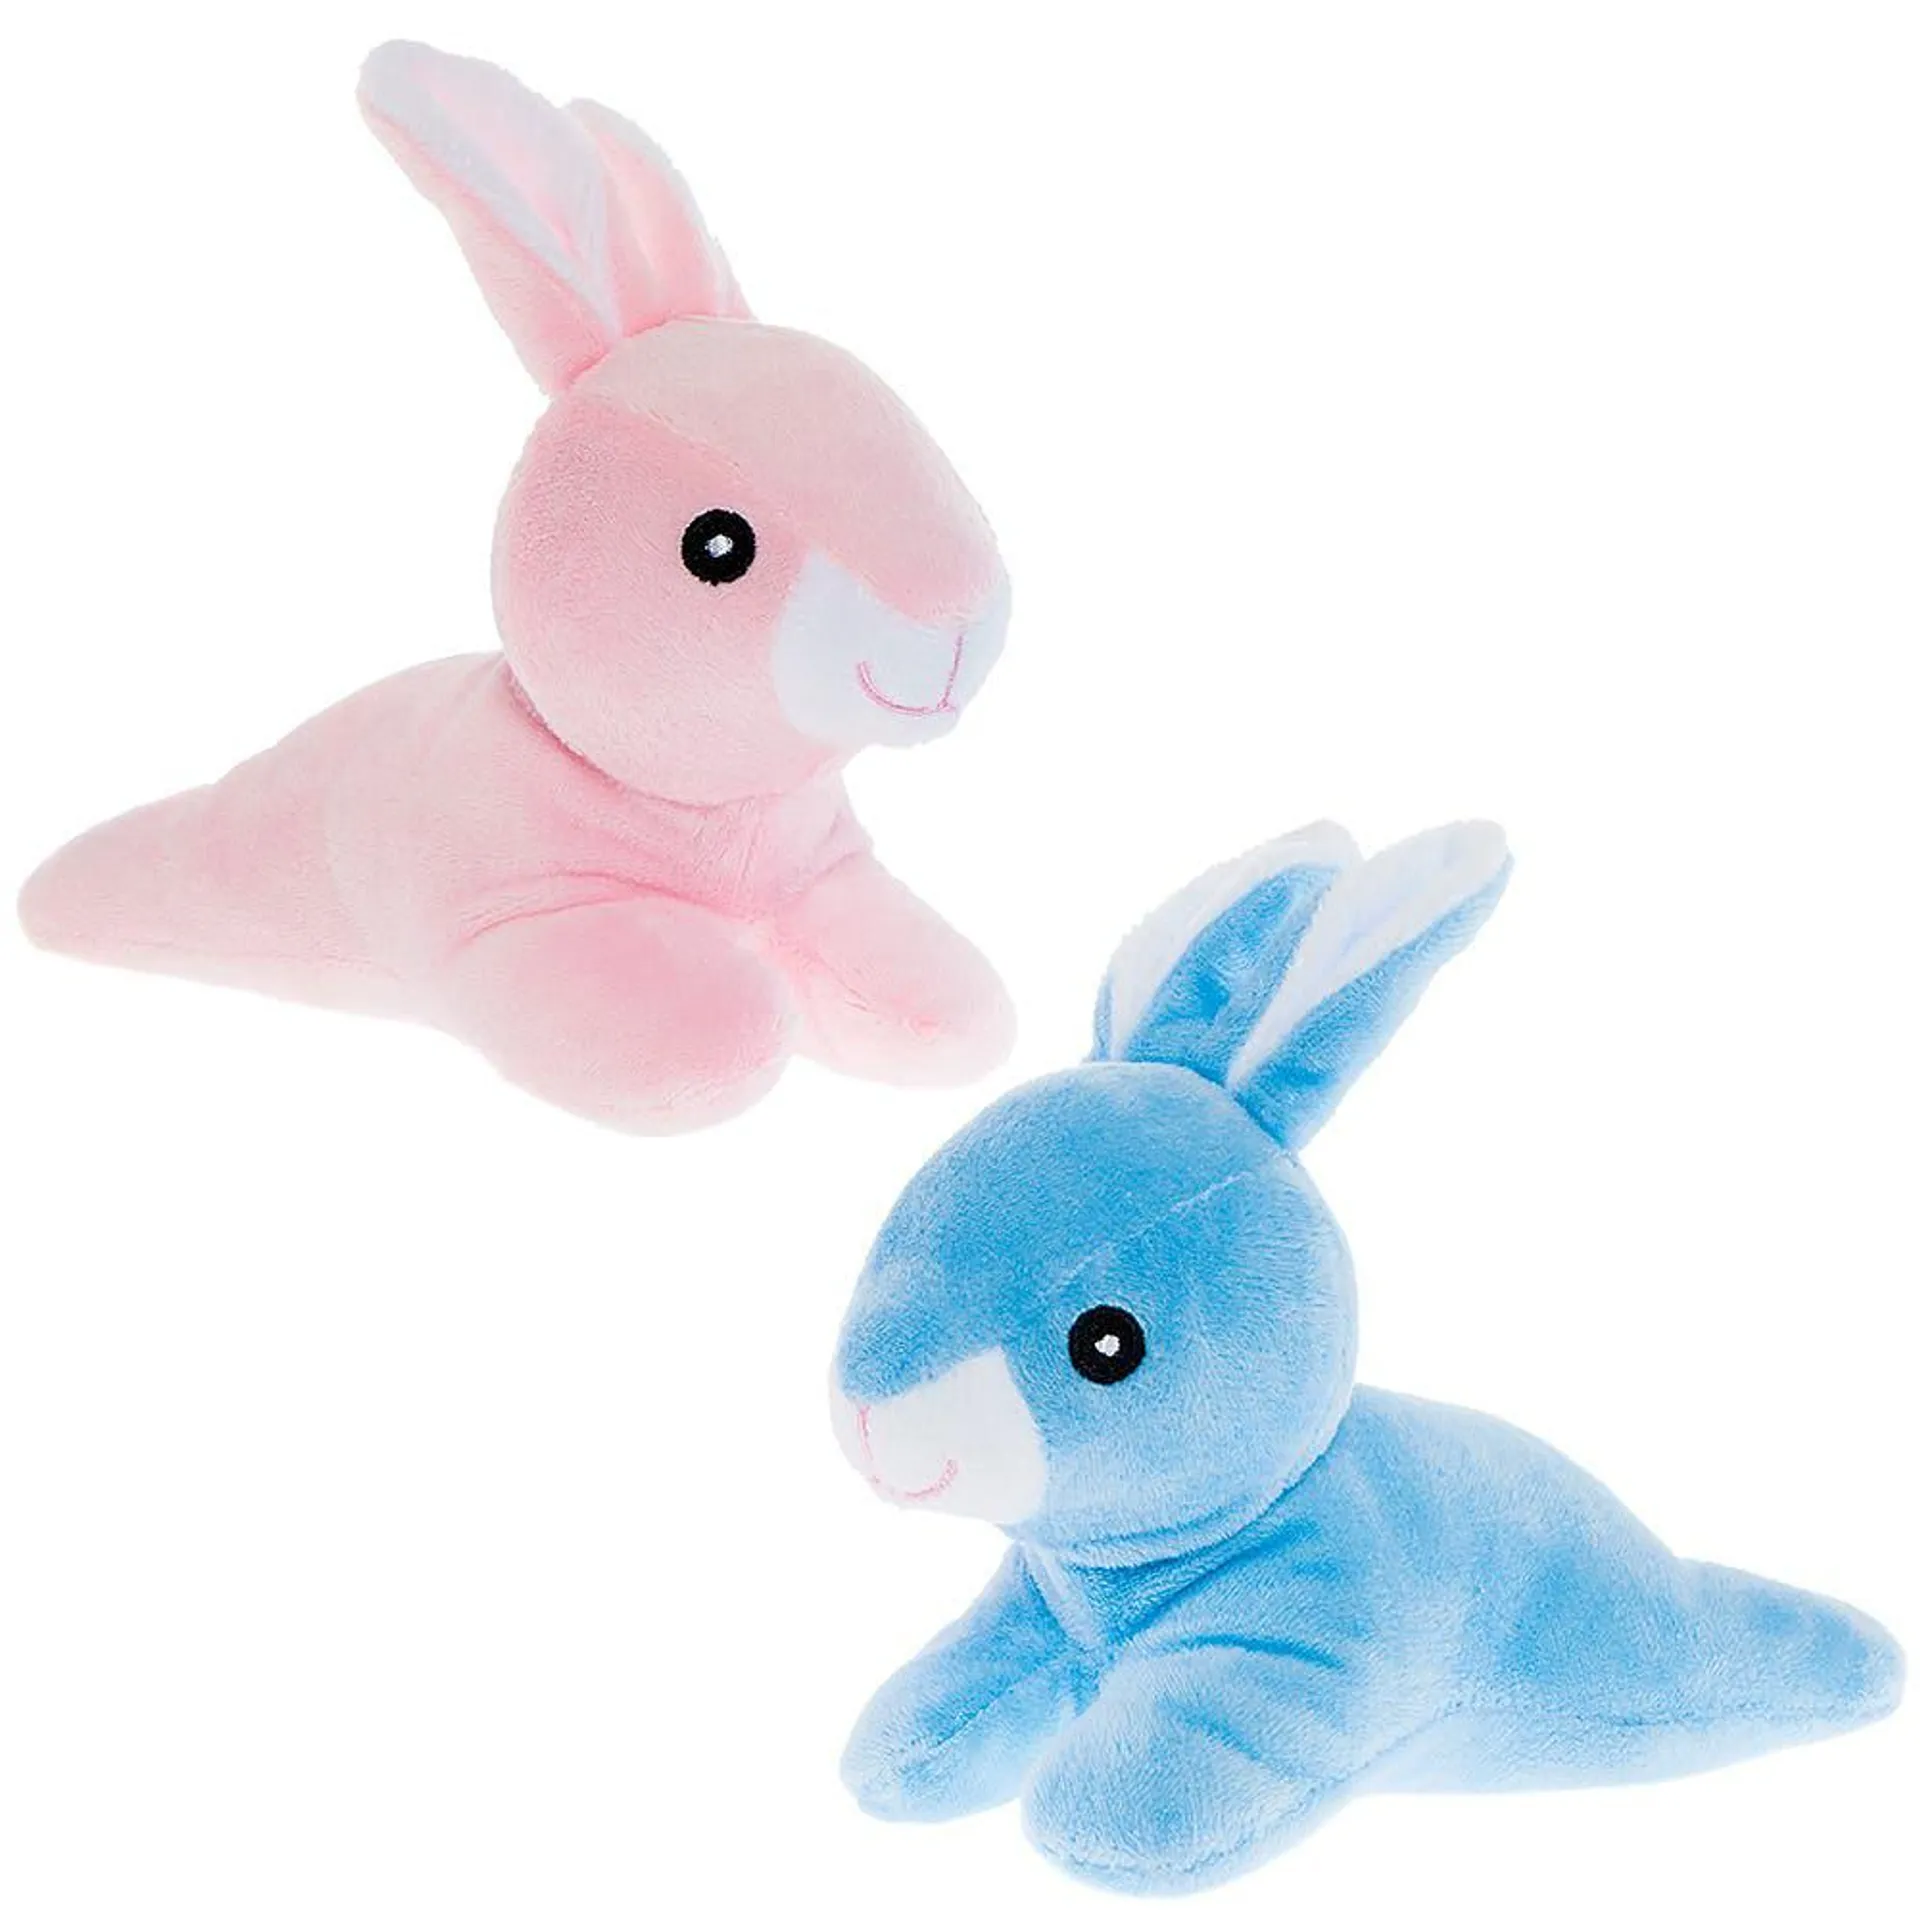 Bunny Plush Toys